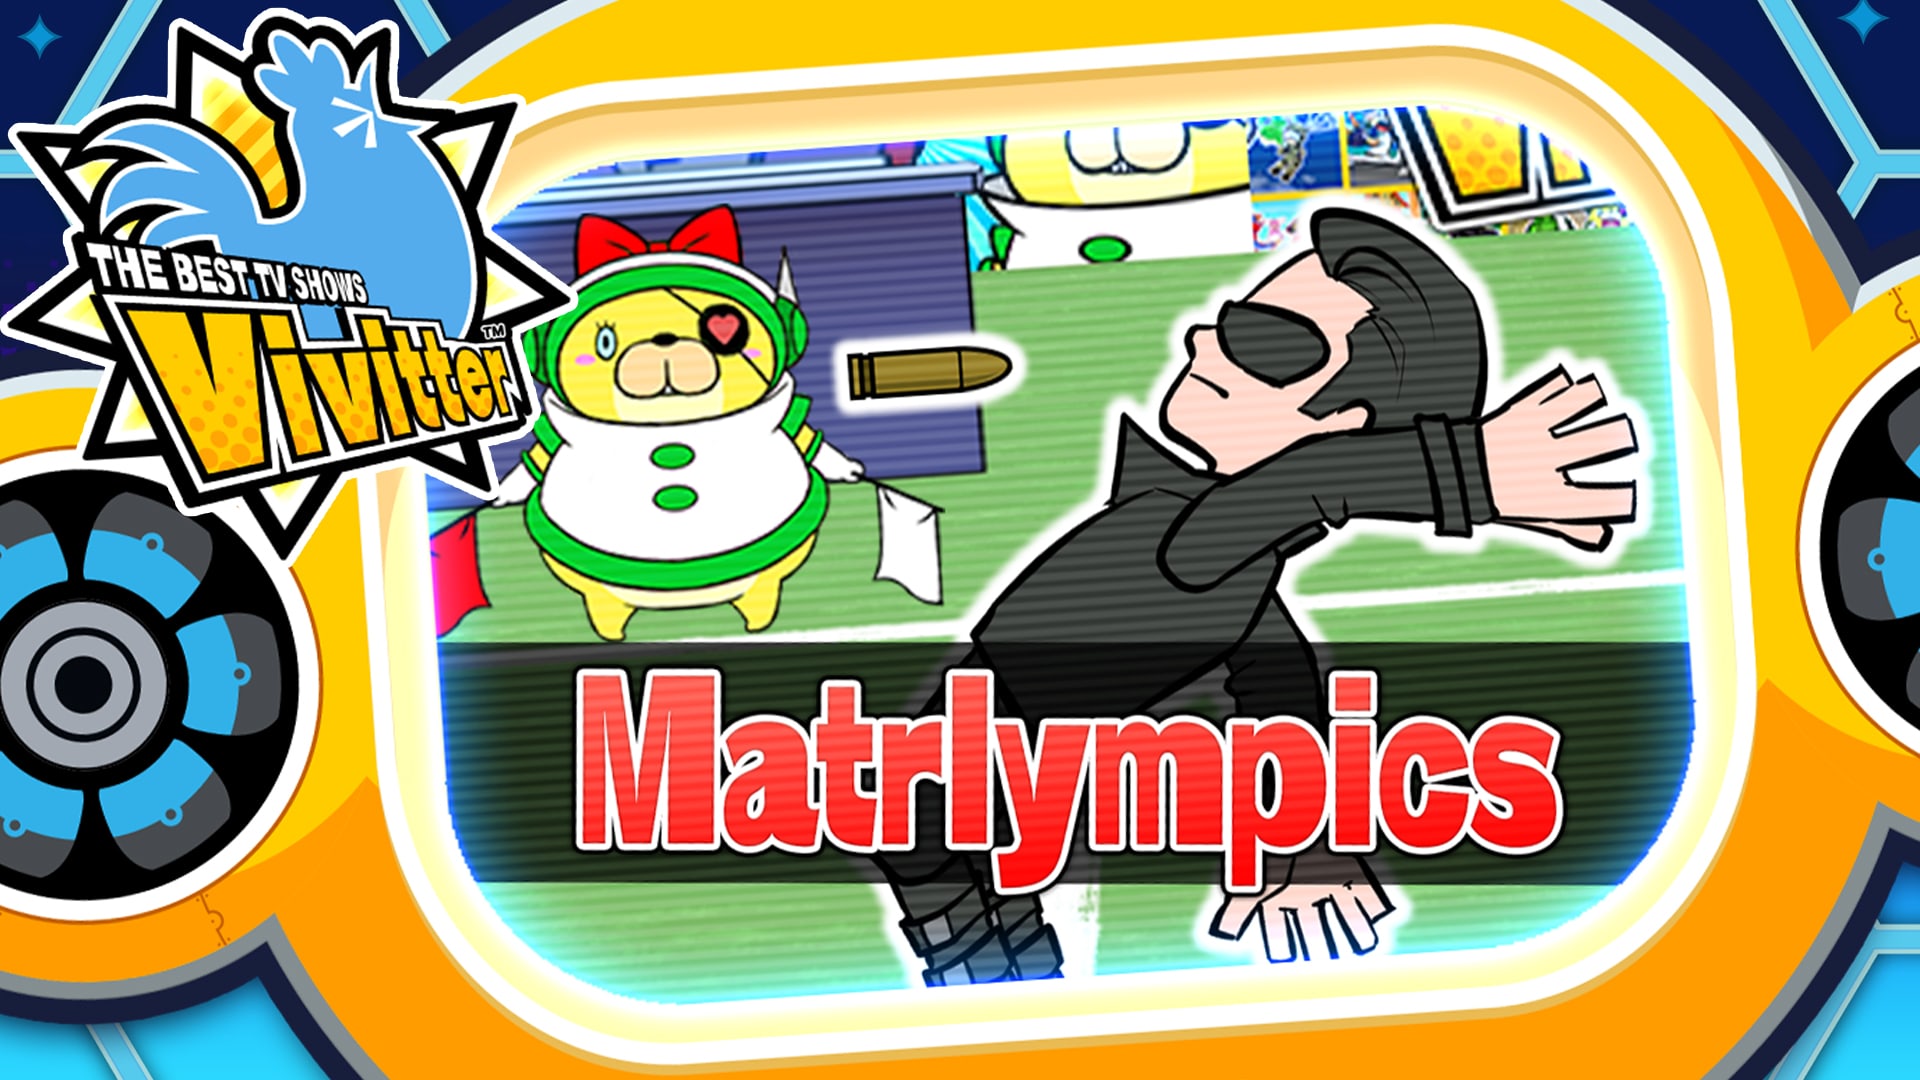 Additional mini-game "Matrlympics"